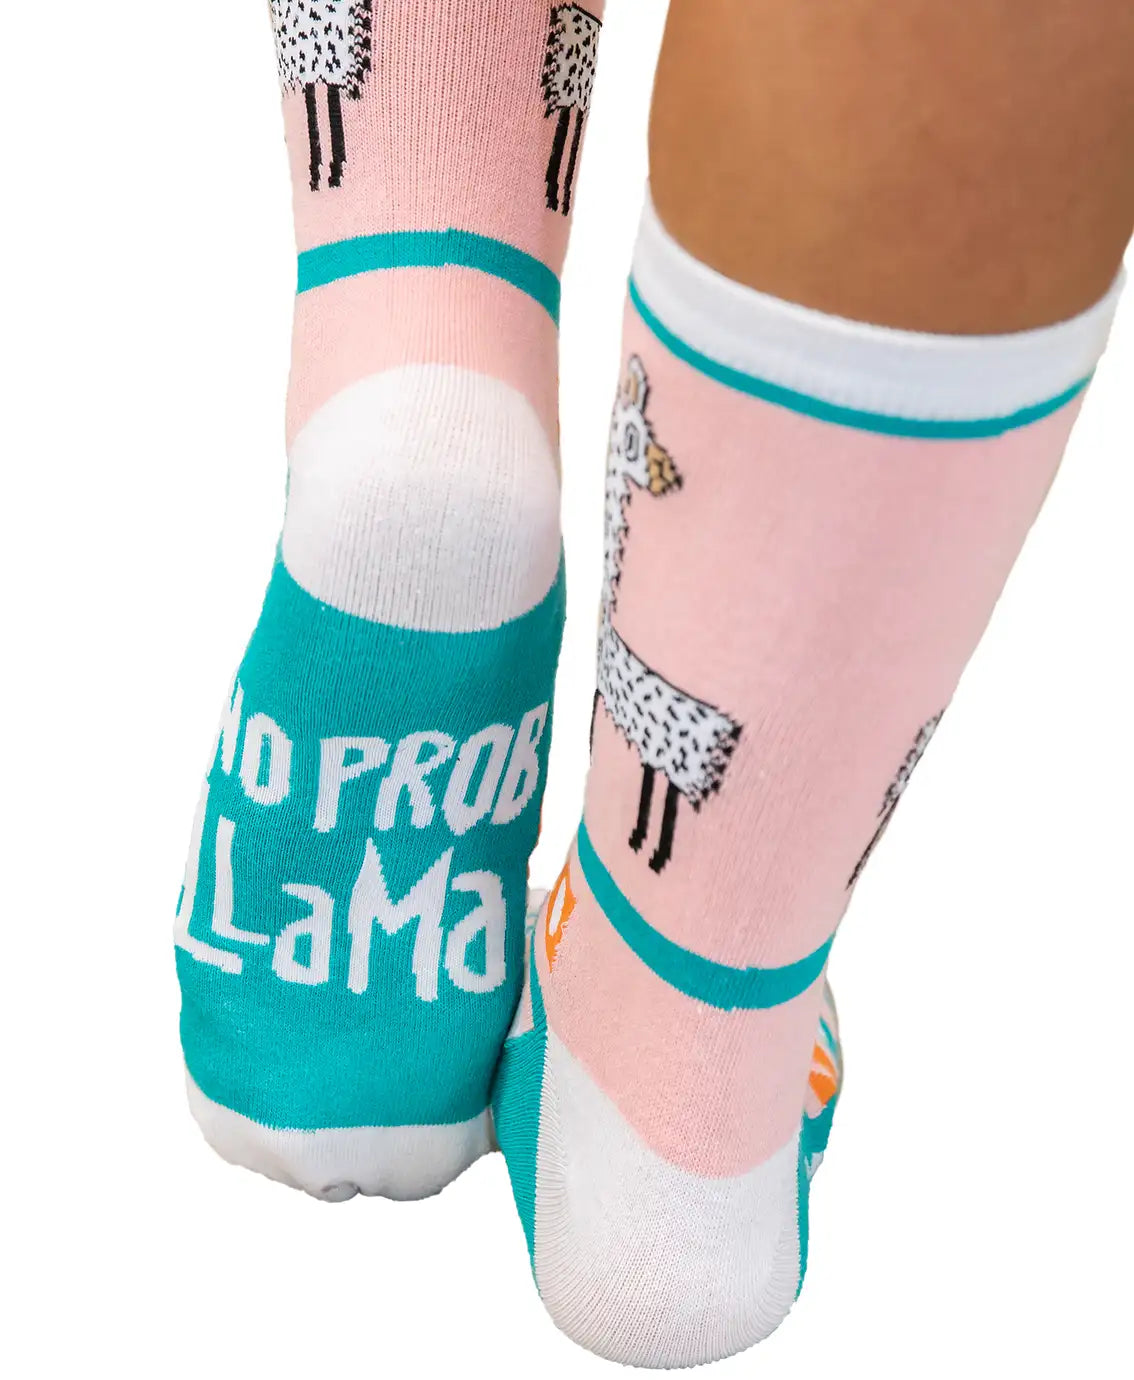 No Prob Llama Crew Socks